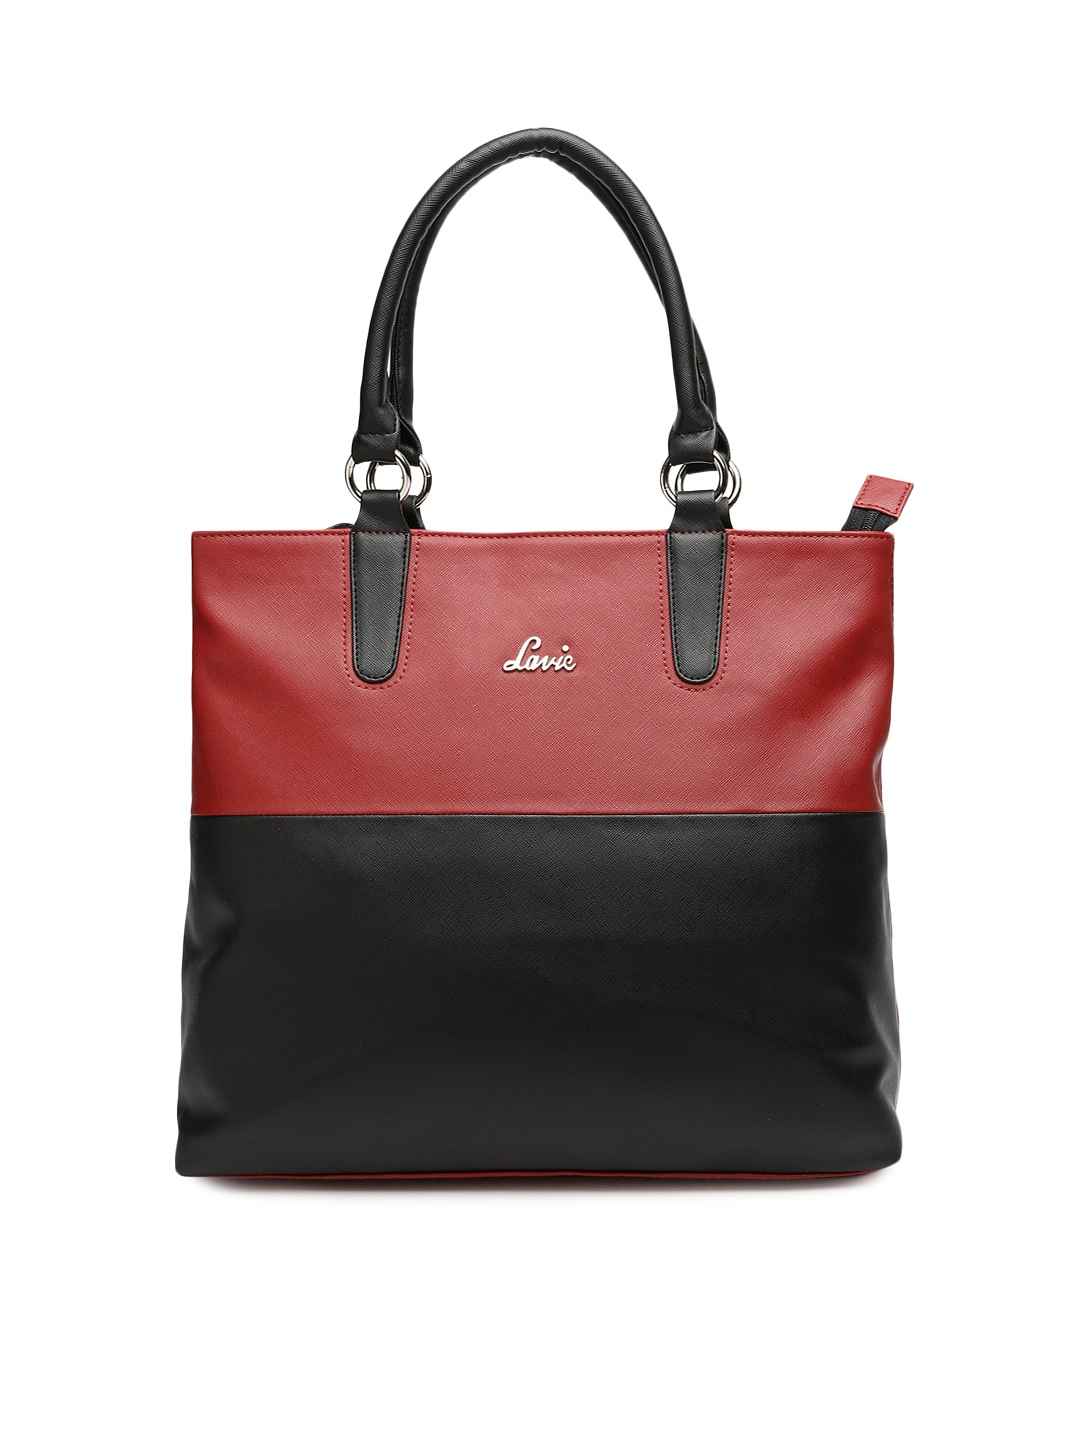 Lavie Handbags. Handbags for Women Shoulder Tote Zipper Purse PU Leather Top-handle Satchel Bags ...